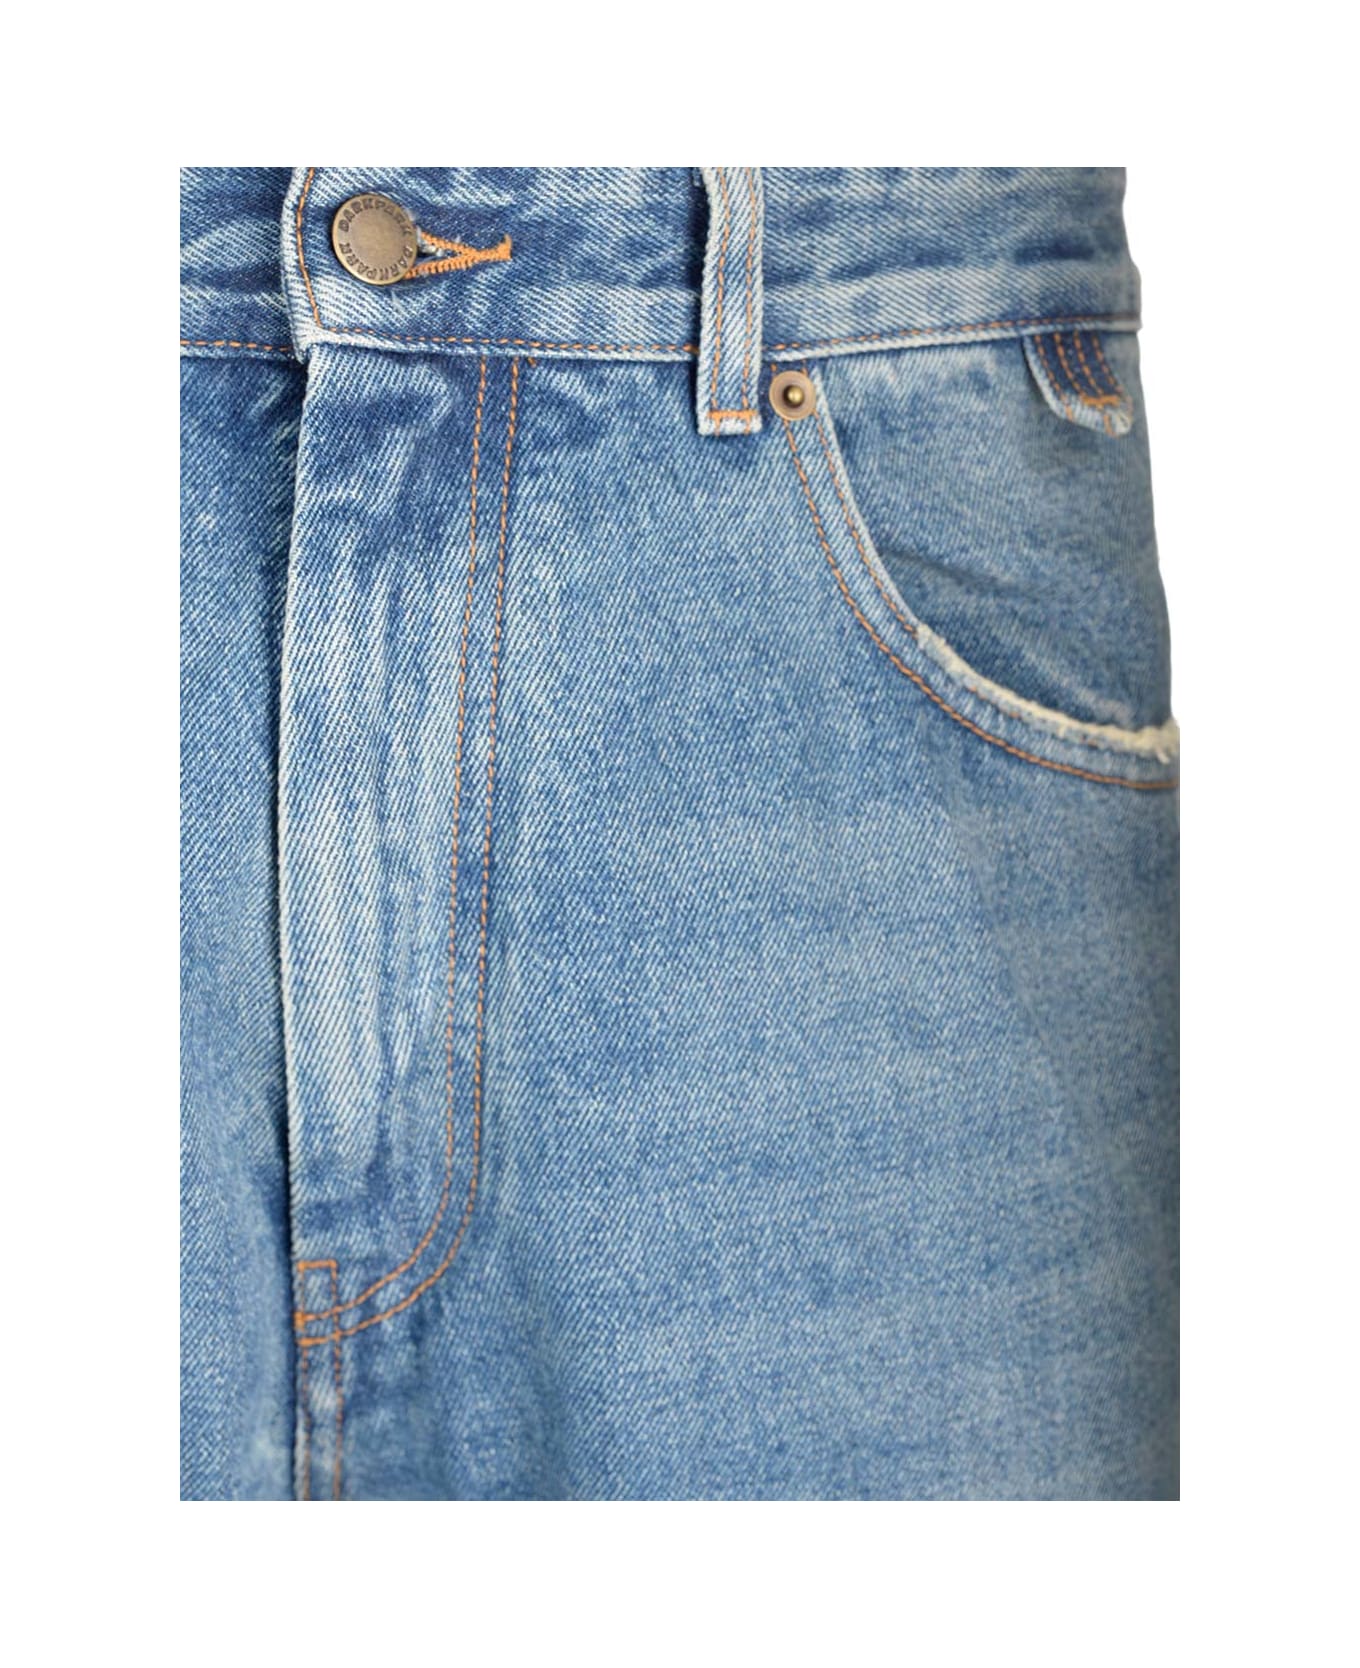 DARKPARK 'john' Carpenter Jeans - Medium Wash